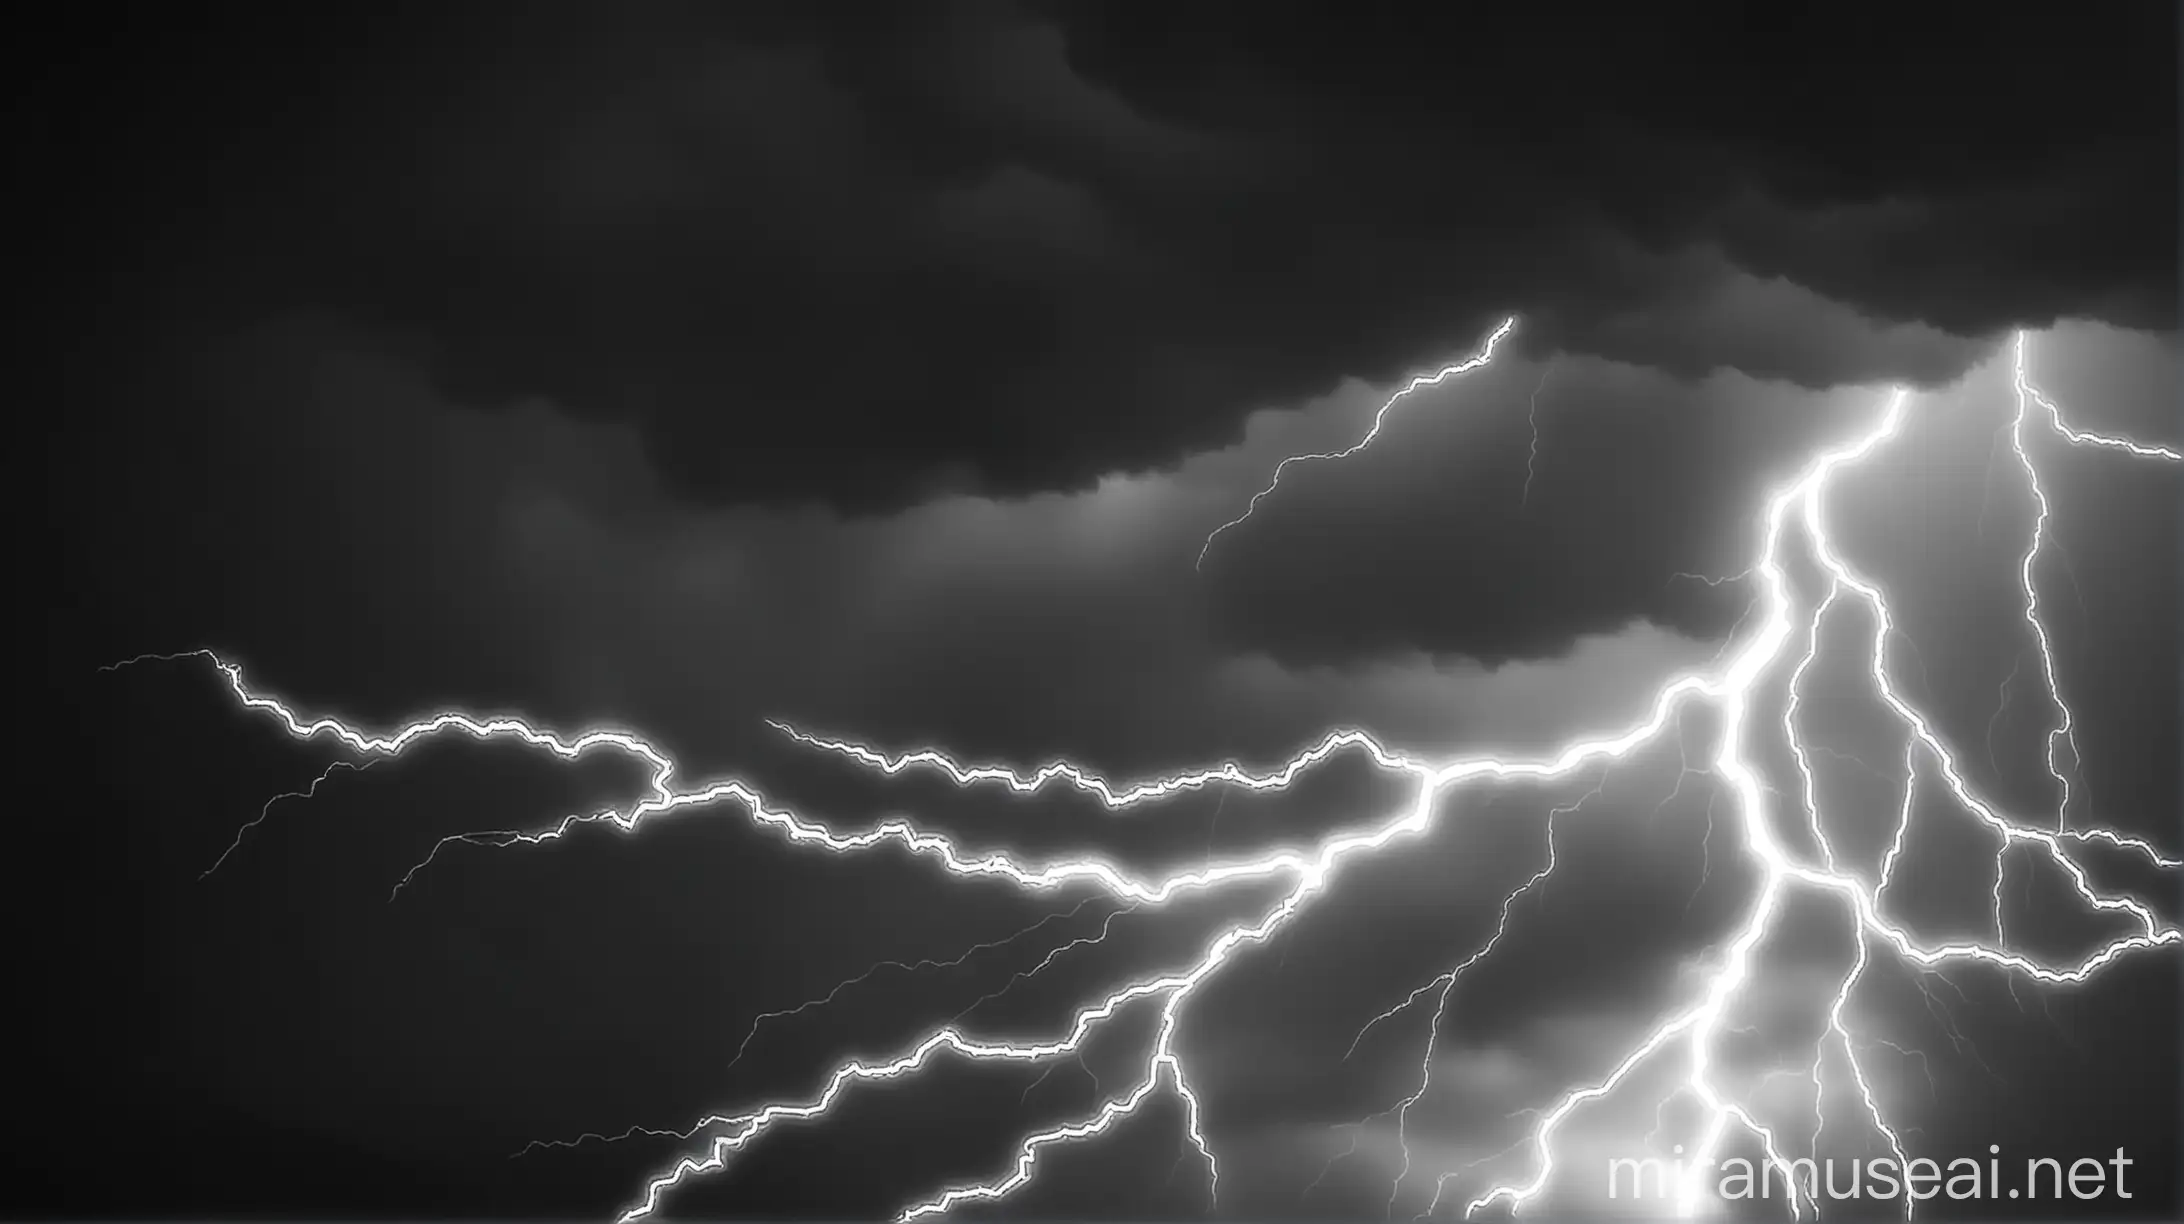 Dramatic Lightning Strikes in Monochrome Sky